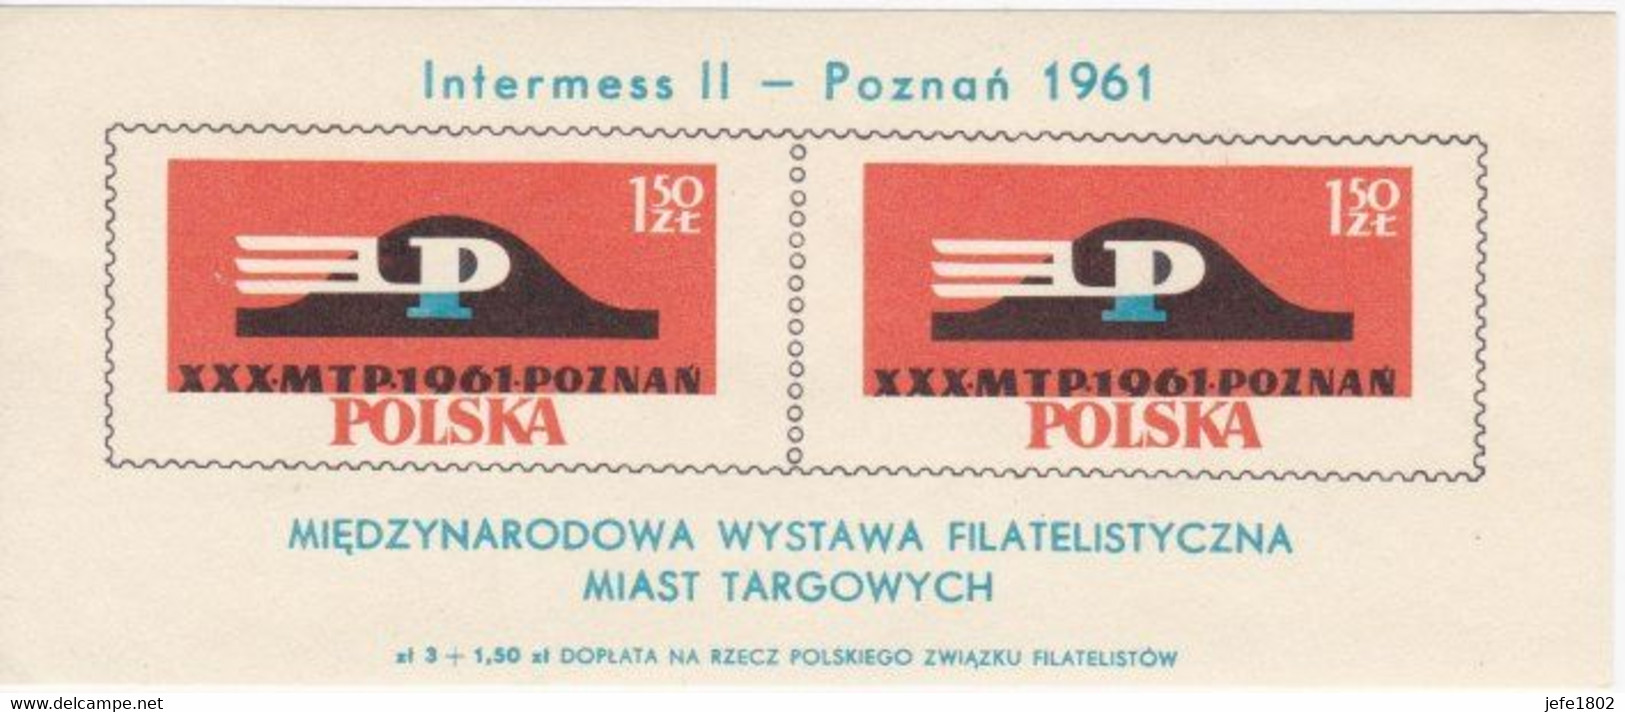 Intermesss II - Poznan 1961 - Markenheftchen